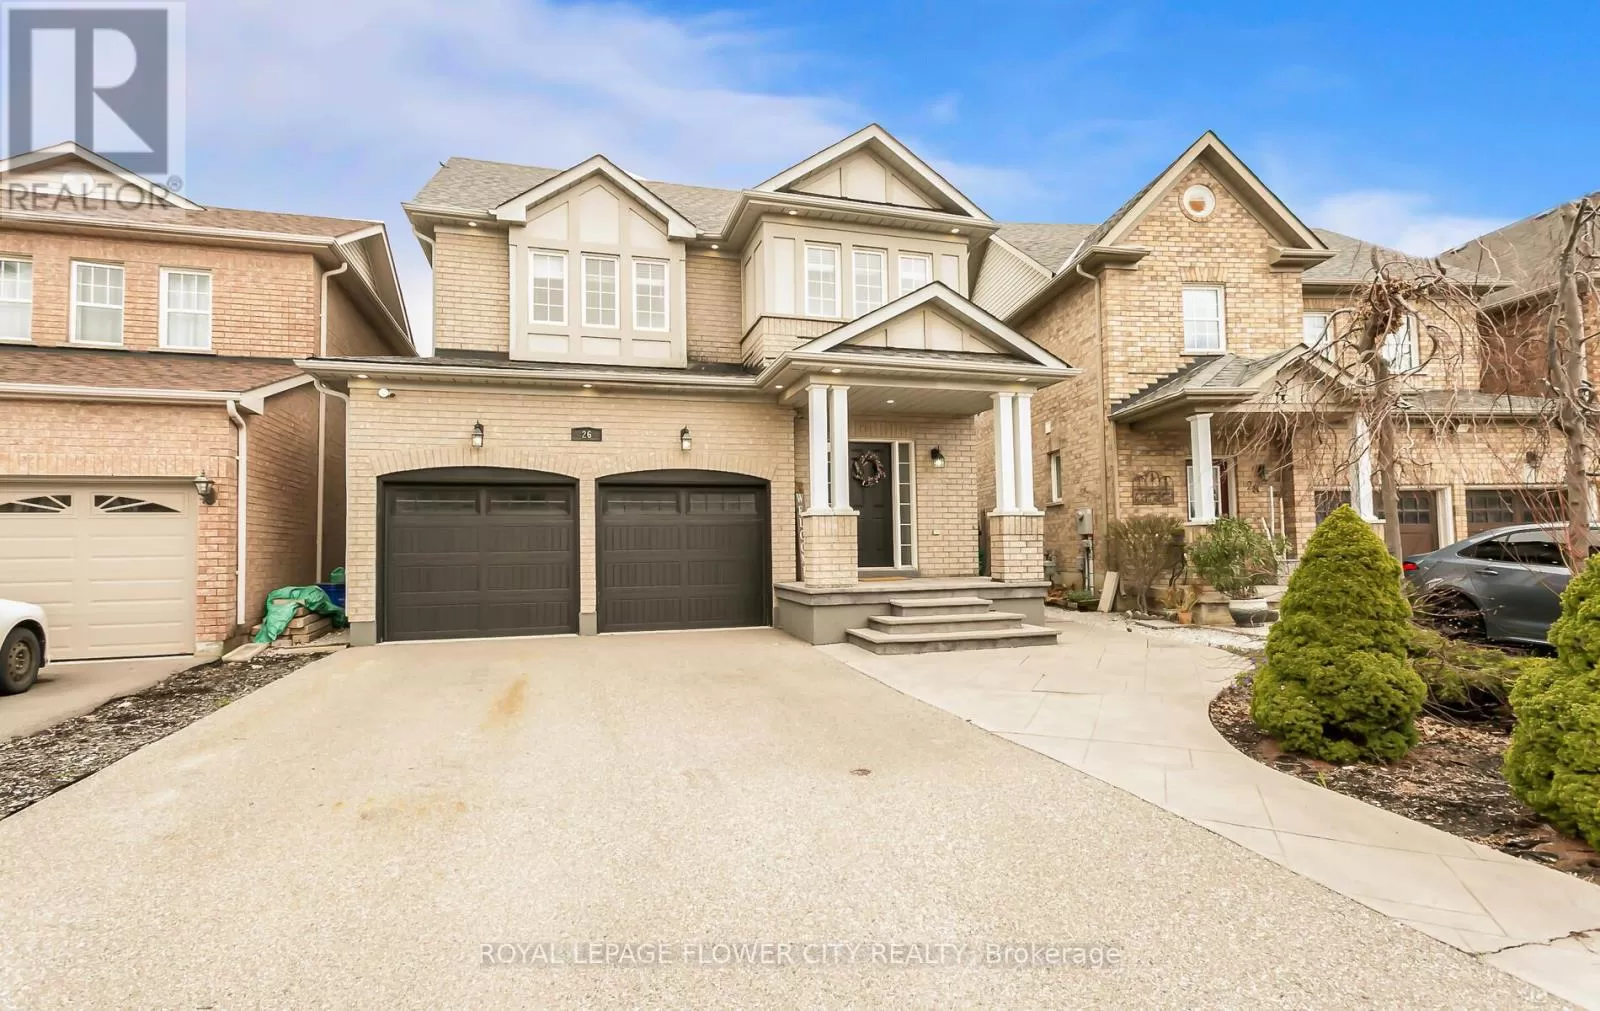 House for rent: 26 Calderstone Rd, Brampton, Ontario L6P 2A4